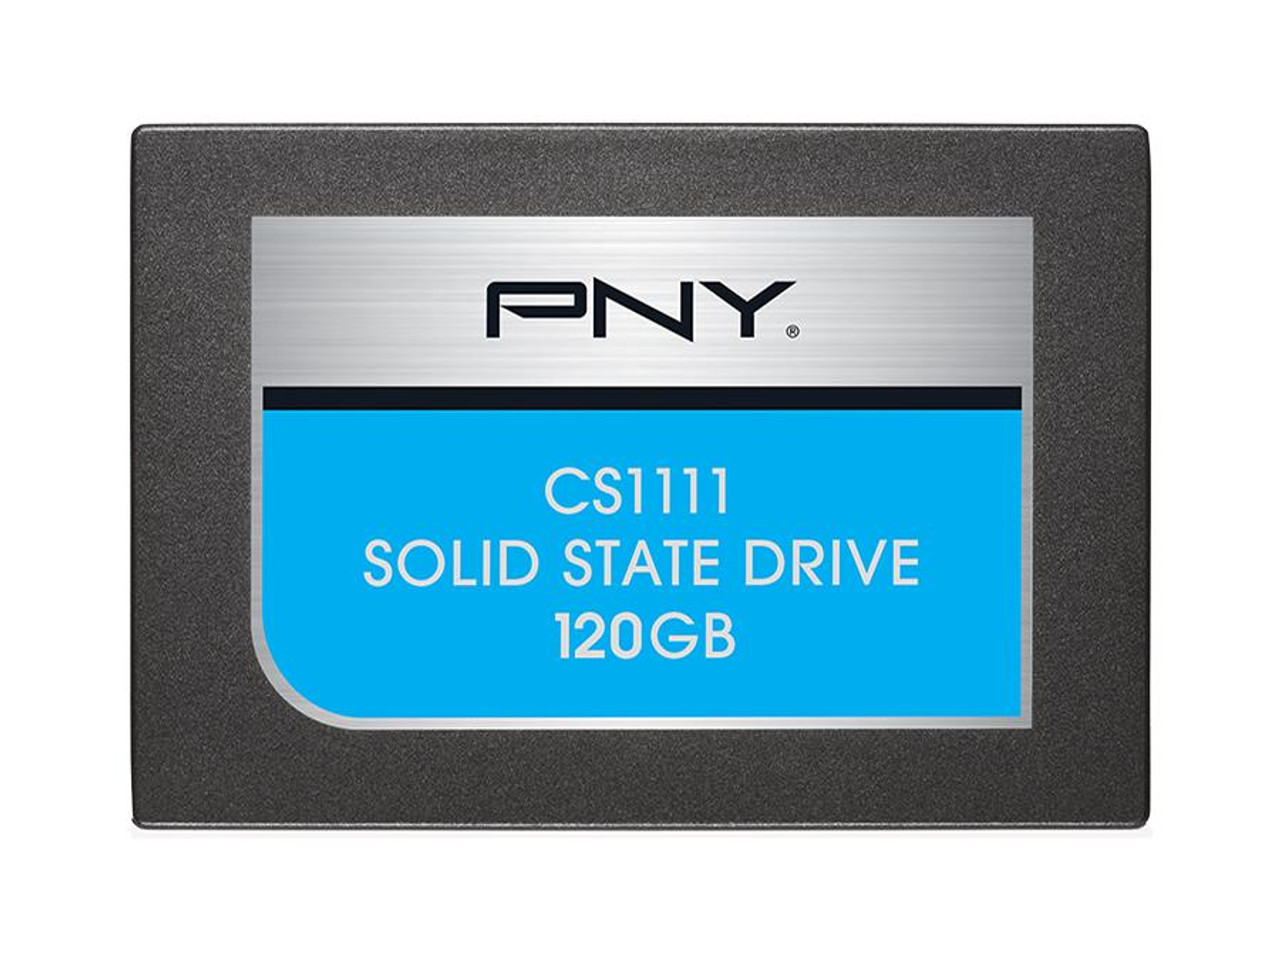 SSD7CS1111-120-RB PNY CS1111 Series 120GB MLC SATA 6Gbps 2.5-inch Internal Solid State Drive (SSD)